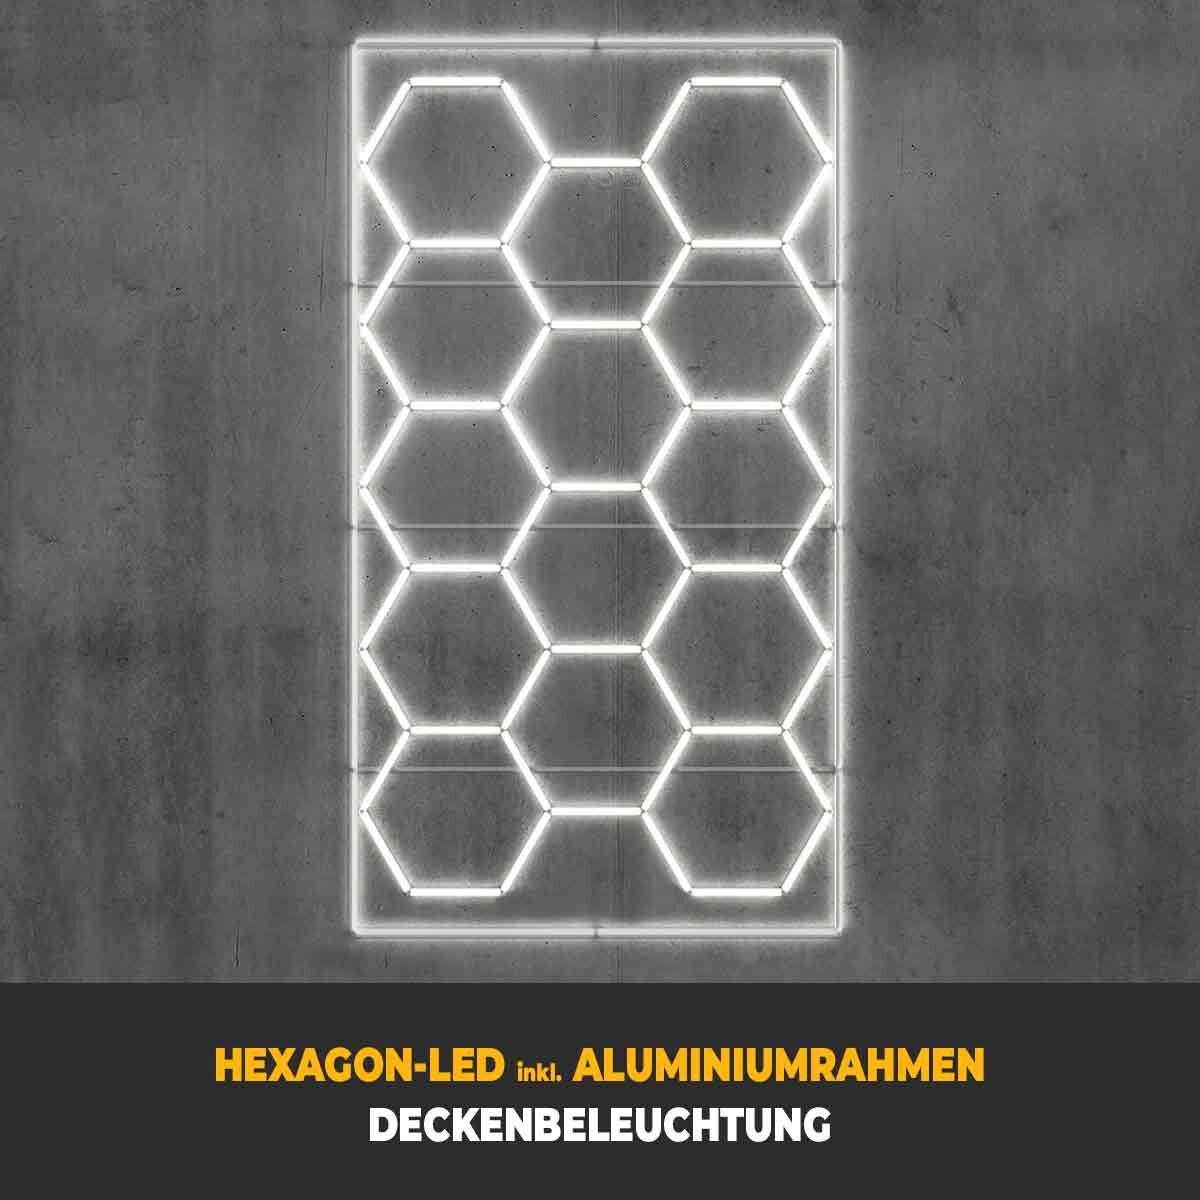 https://www.waschguru.de/media/image/product/26282/lg/performance-floor-hexagon-led-deckenbeleuchtung-inkl-aluminiumrahmen.jpg